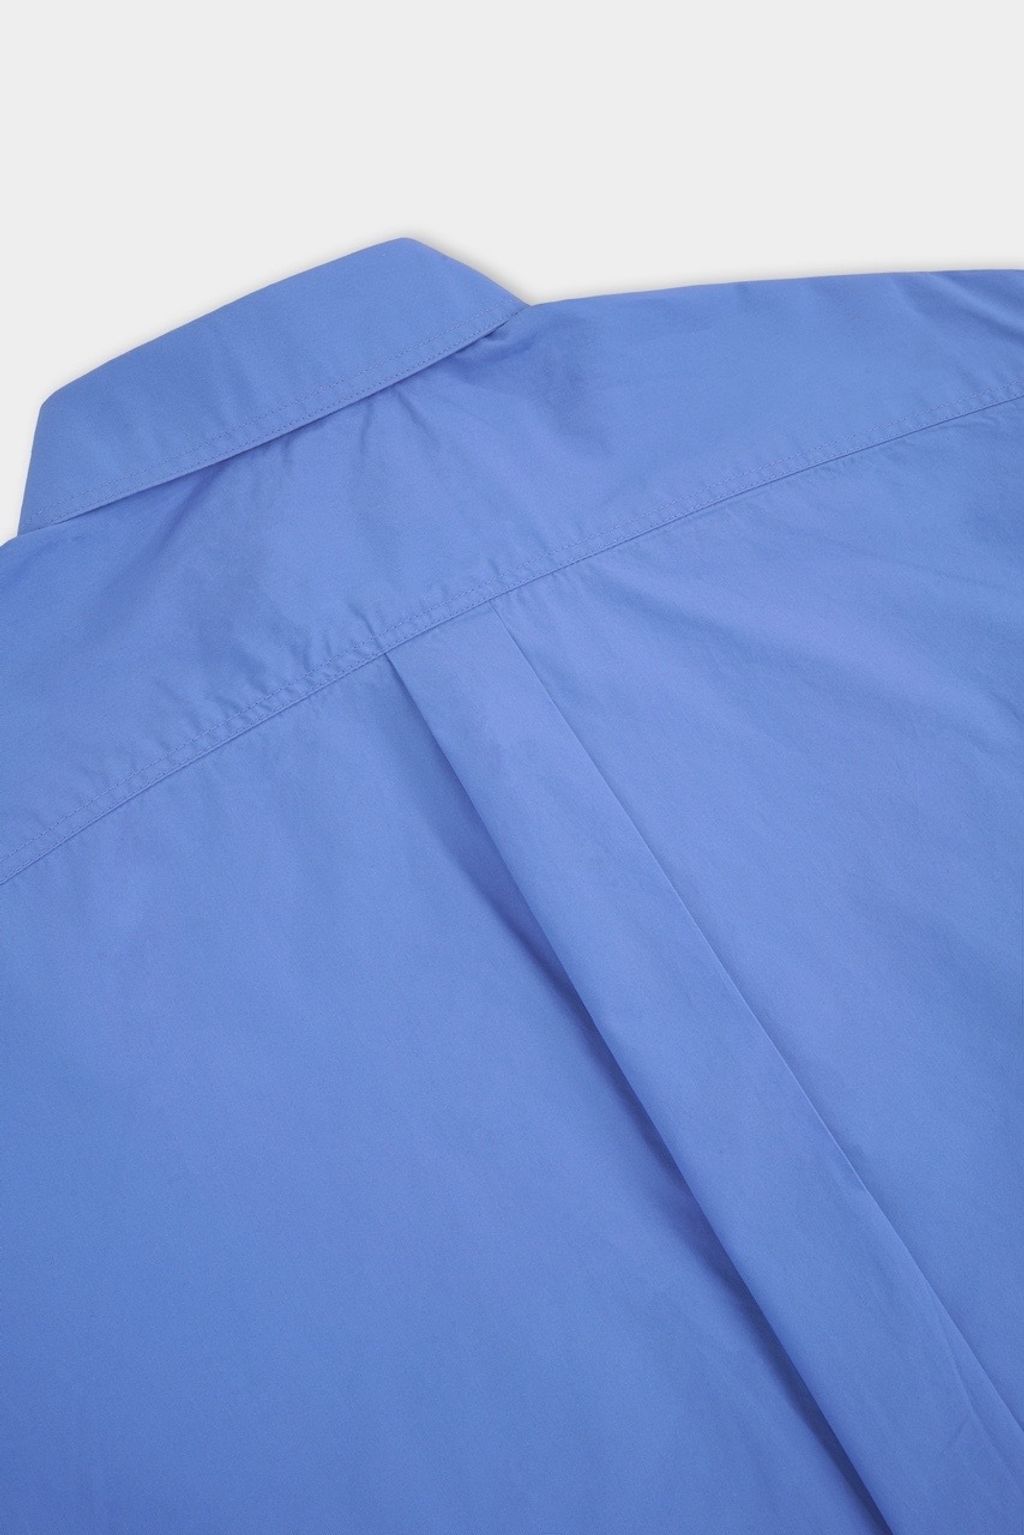 OPPAKOREA Comfy 口袋棉質襯衫 (3色) (優質高密度棉)